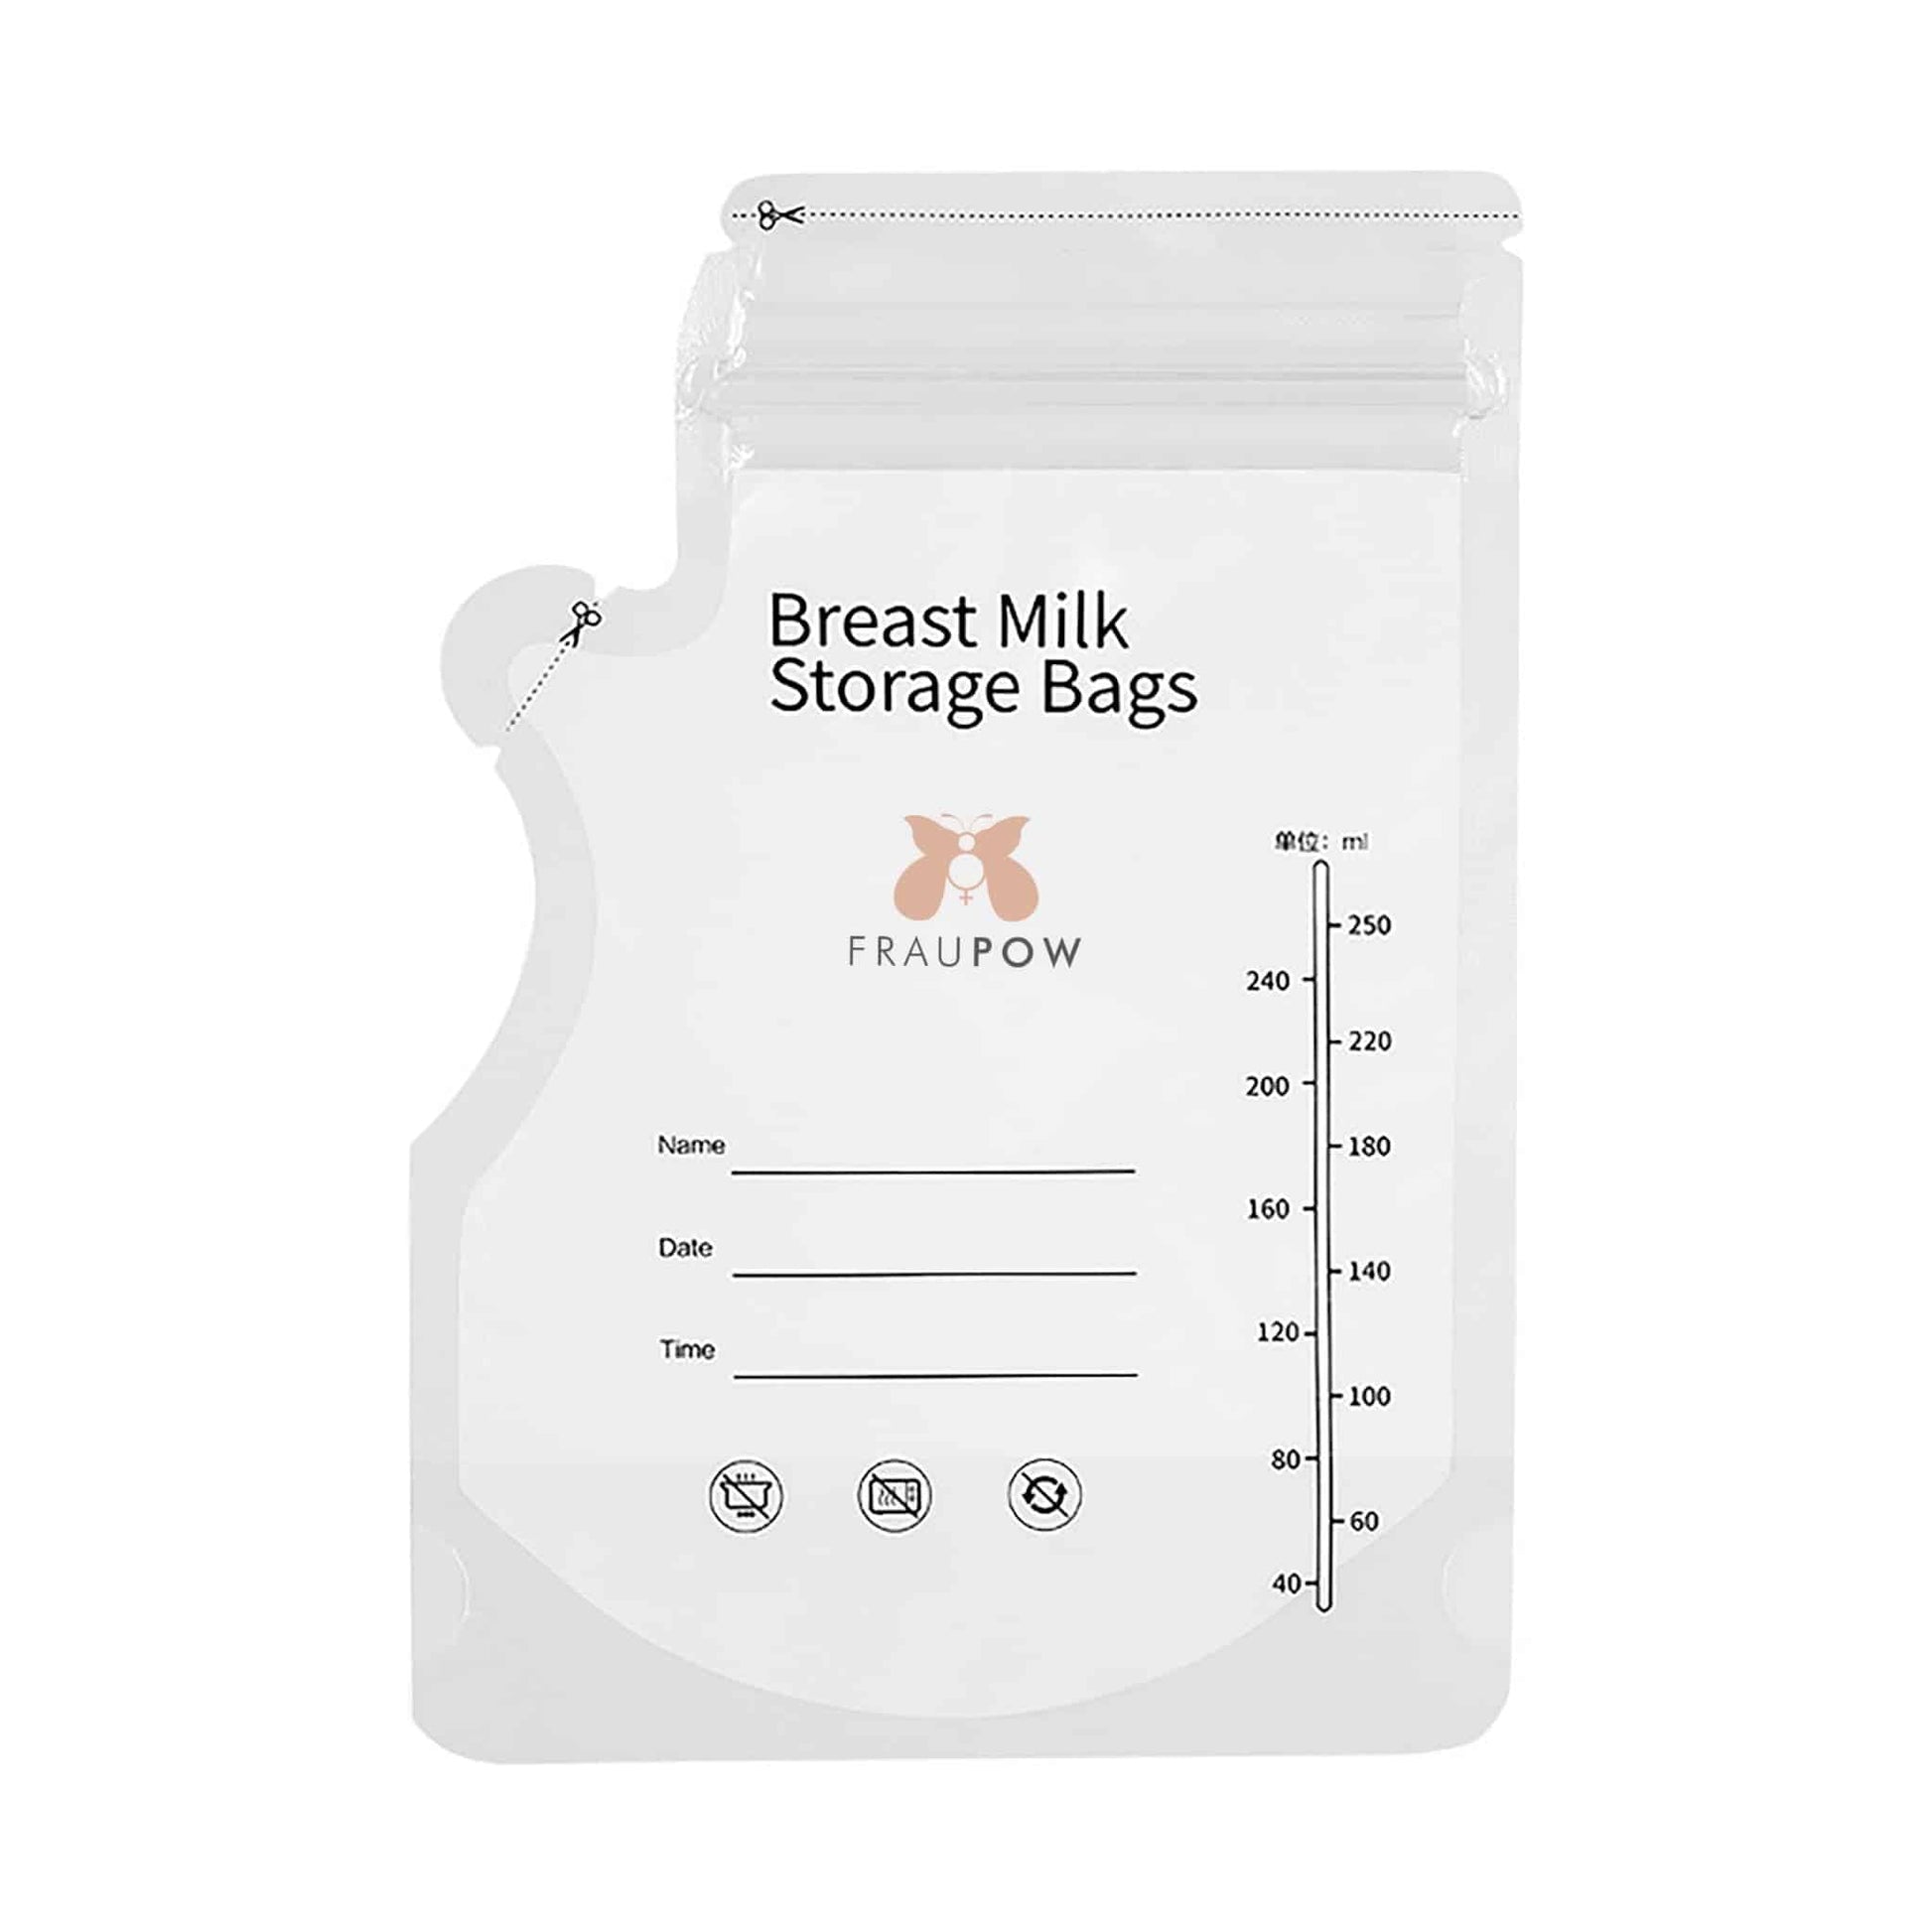 Fraupow Breast Milk Storage Bags